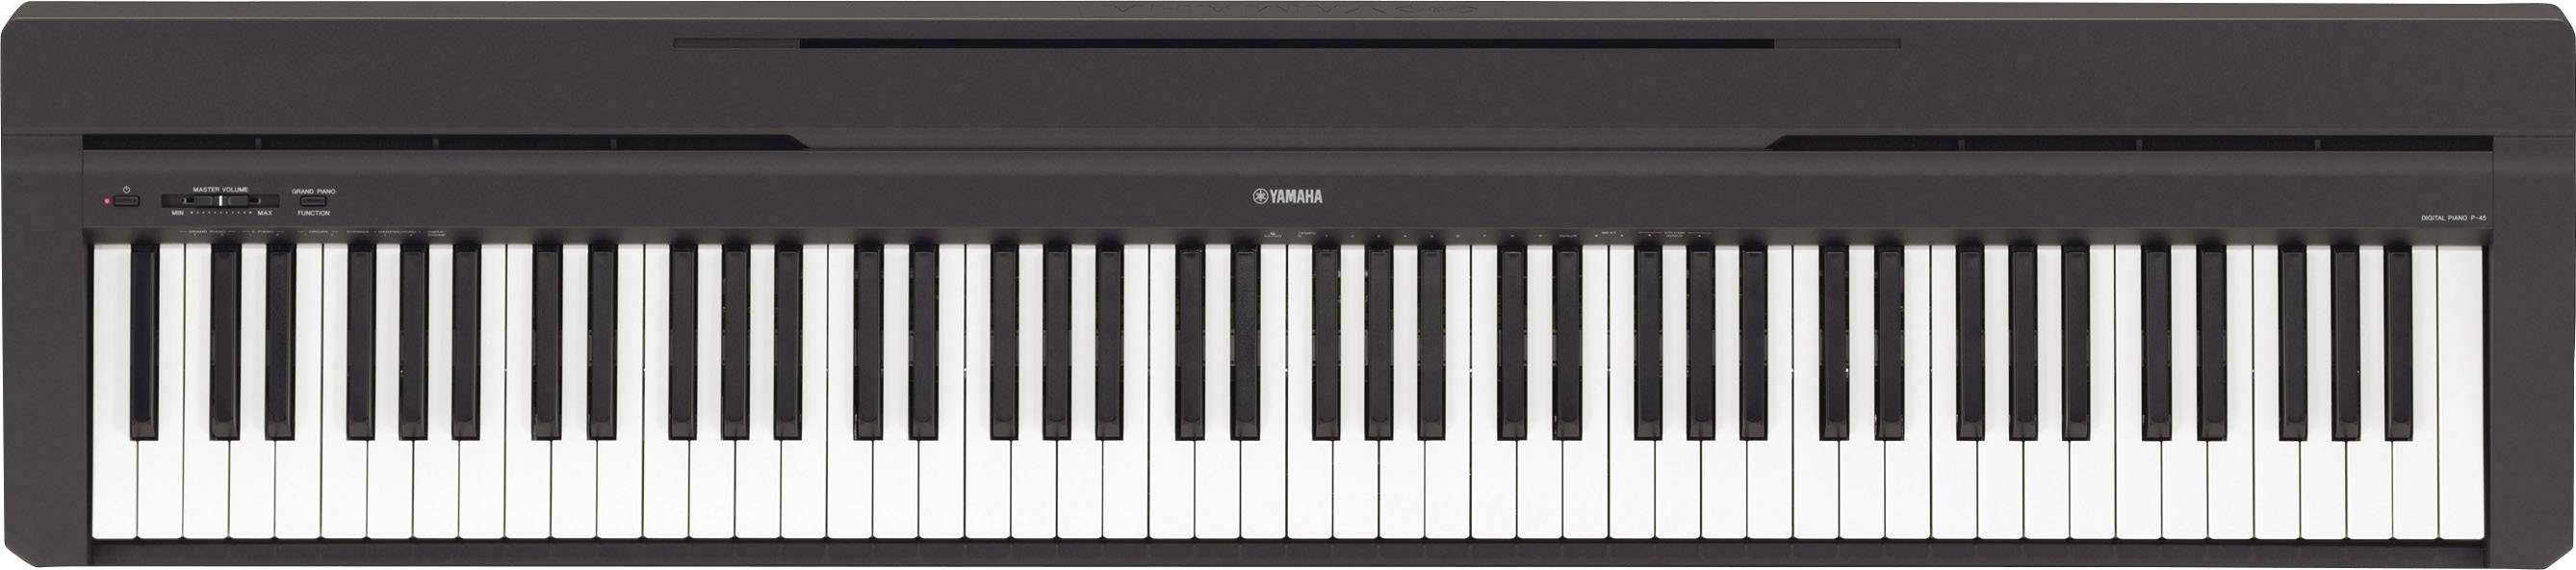 Yamaha P-45B Electric piano Black incl. PSU | Conrad.com